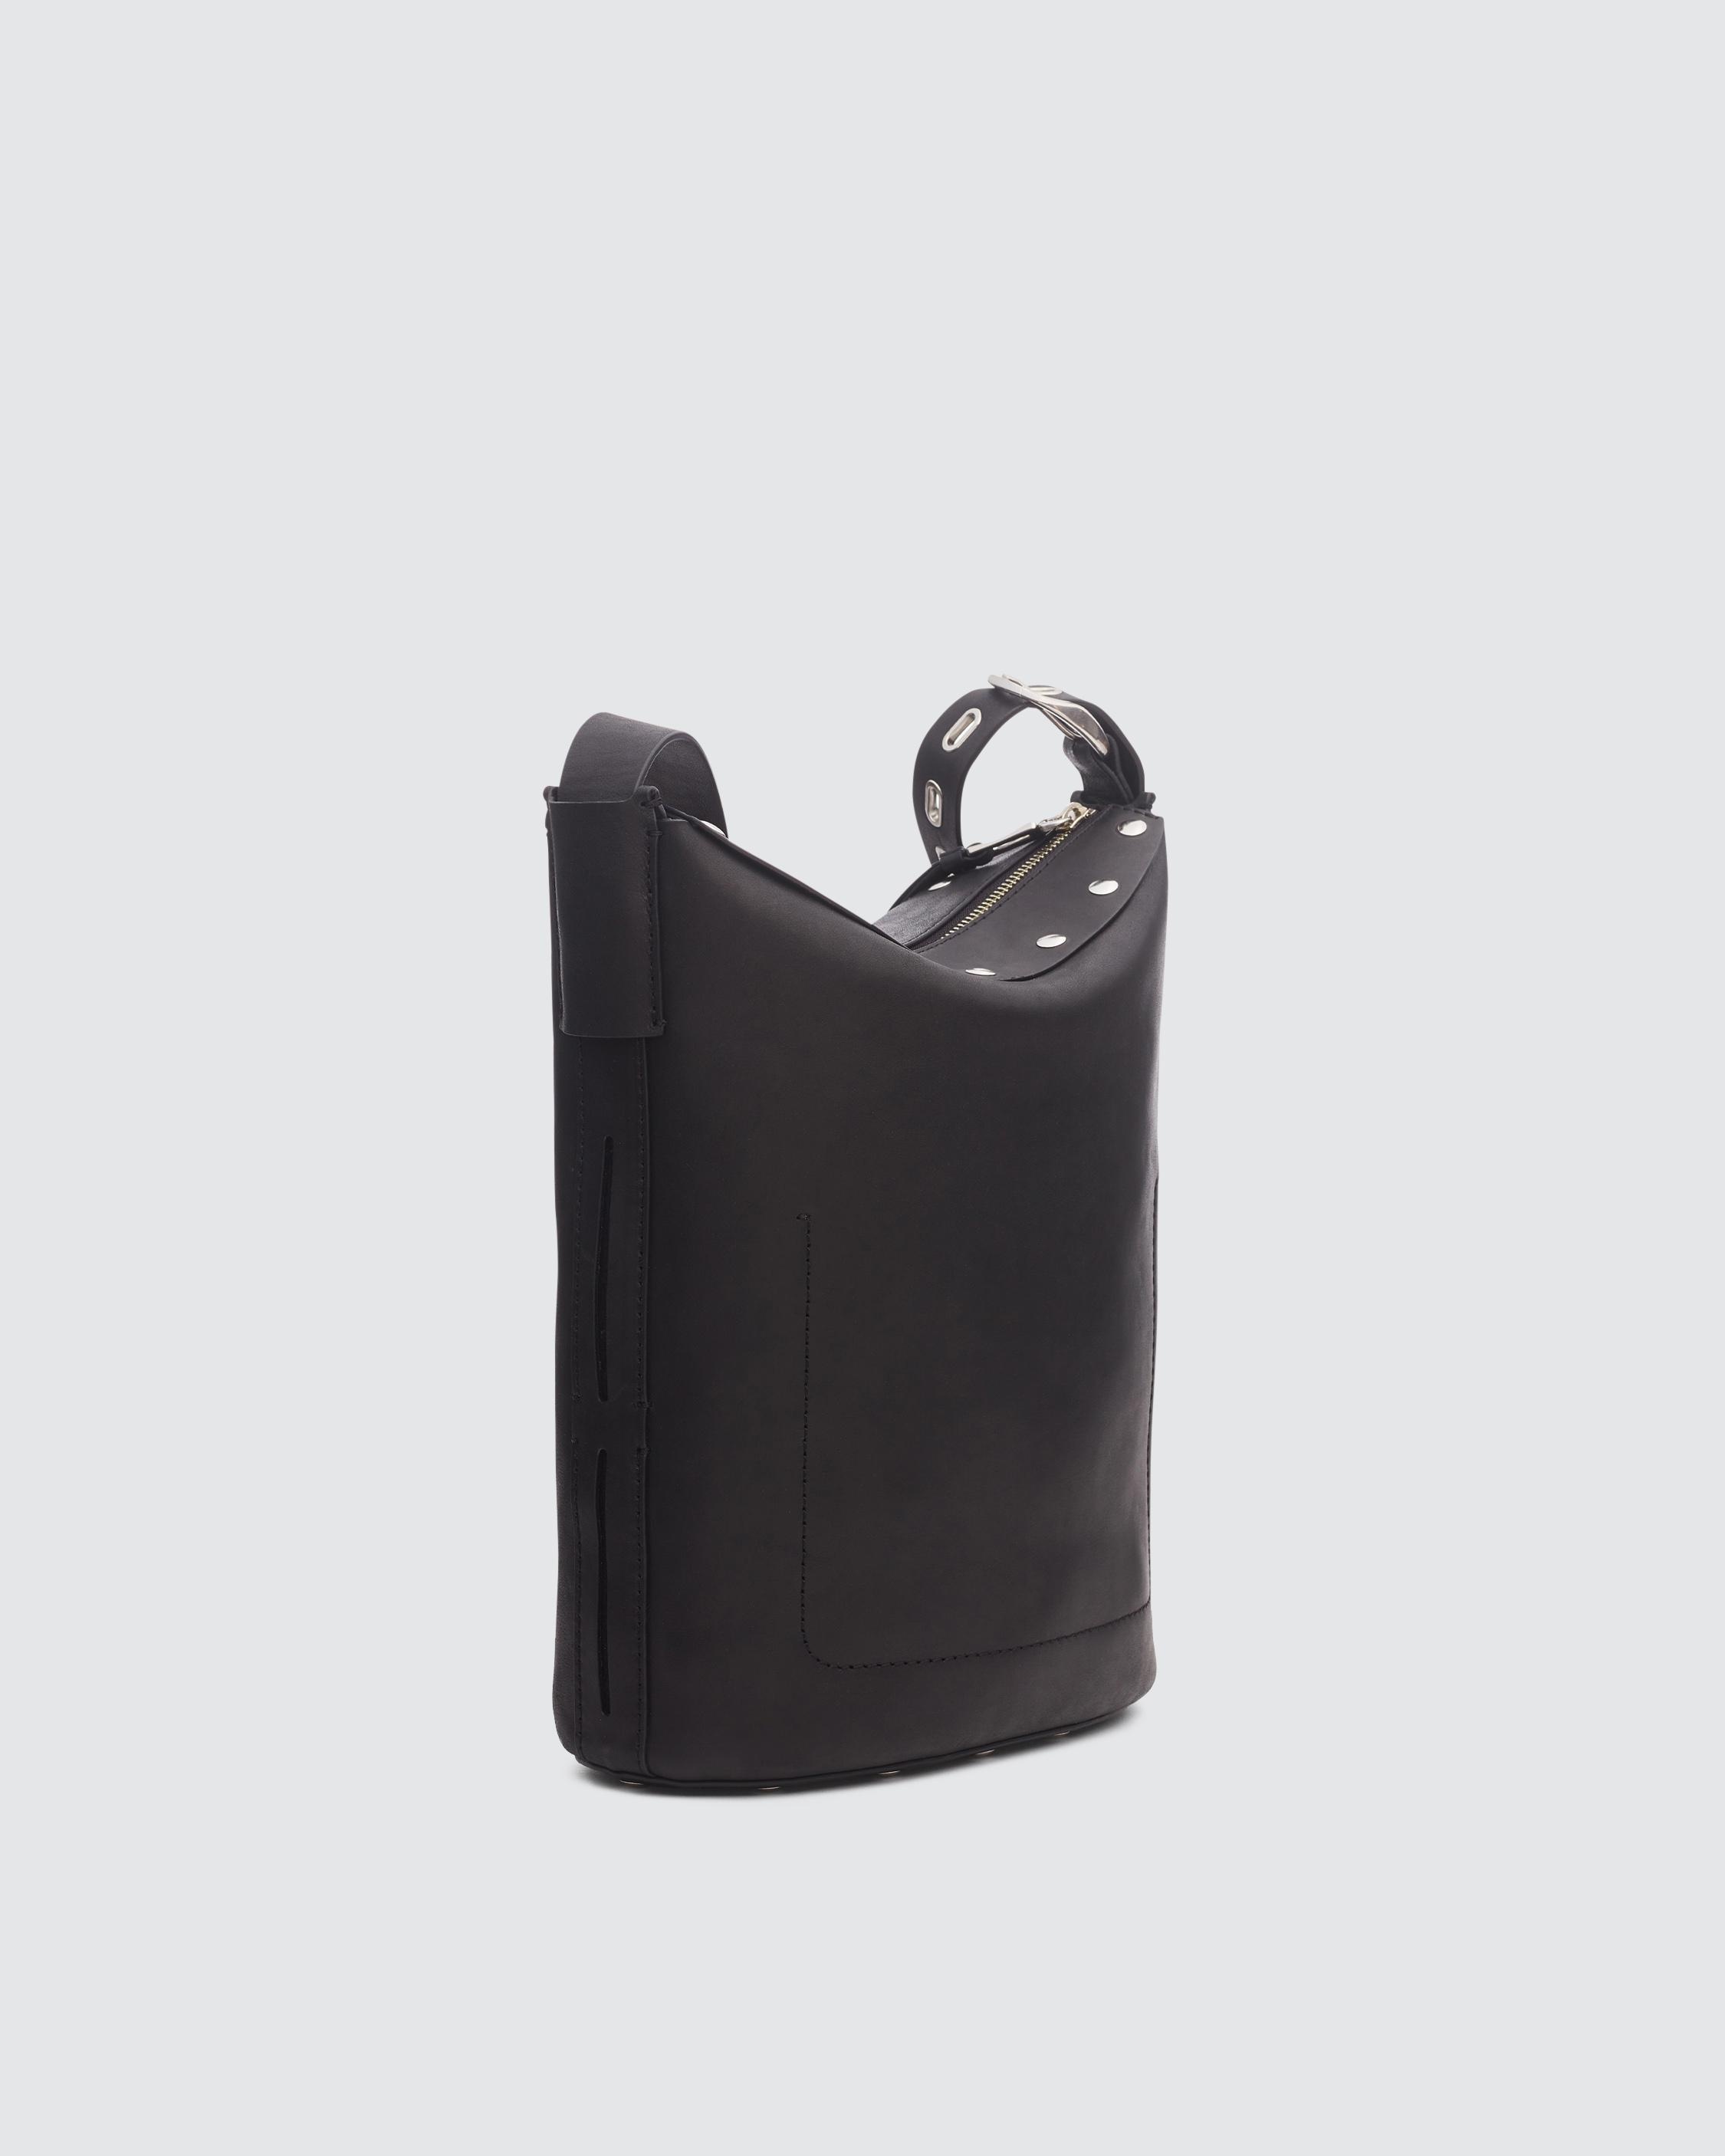 Belize Bucket Bag - Leather
Crossbody Bag - 3